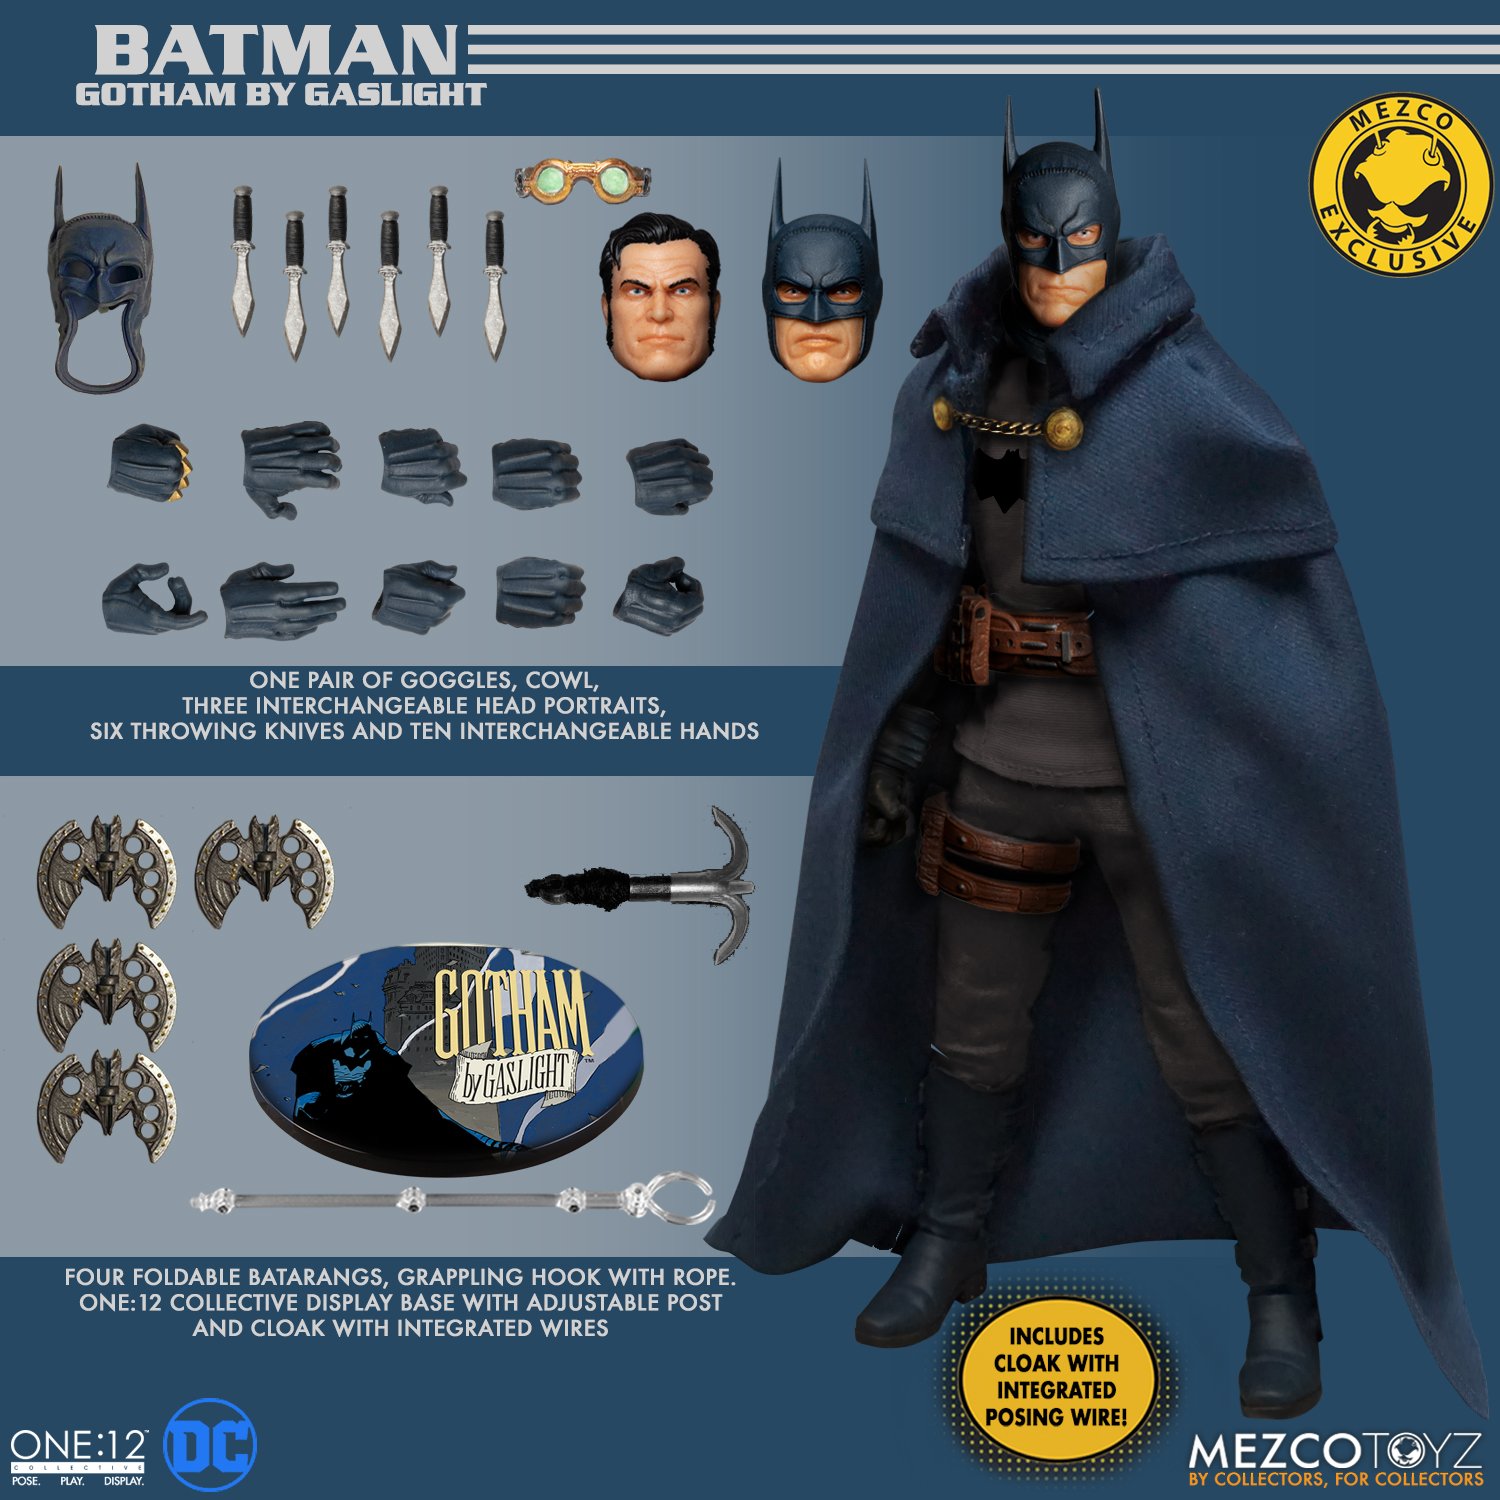 DC Universe Batman Minifigure GOTHAM BY GASLIGHT Details about   **NEW** LEGO Custom Printed 